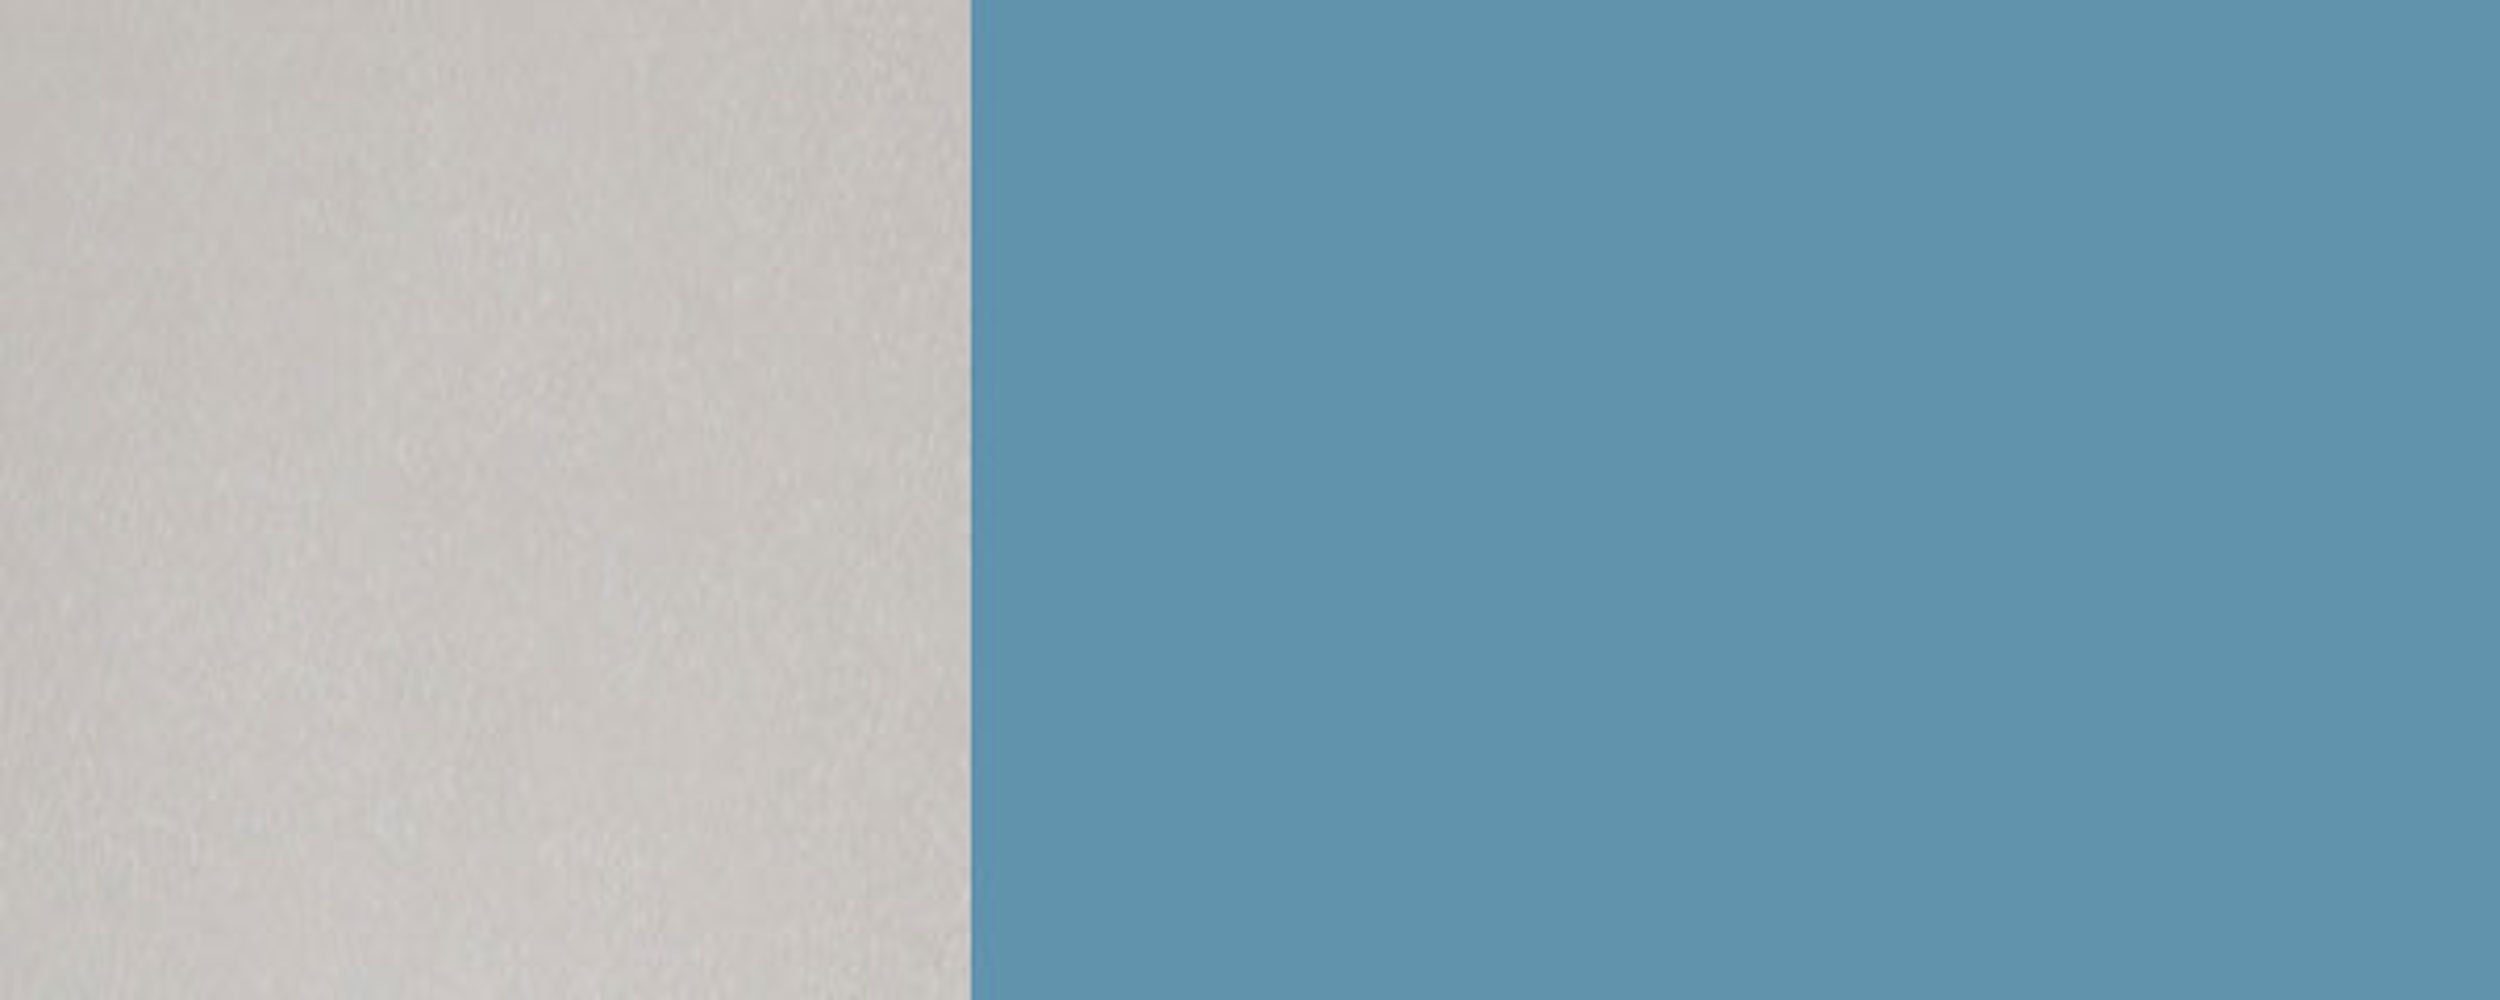 Feldmann-Wohnen 1-türig Front- pastellblau matt und wählbar Korpusfarbe 40cm Klapphängeschrank Rimini 5024 RAL (Rimini)